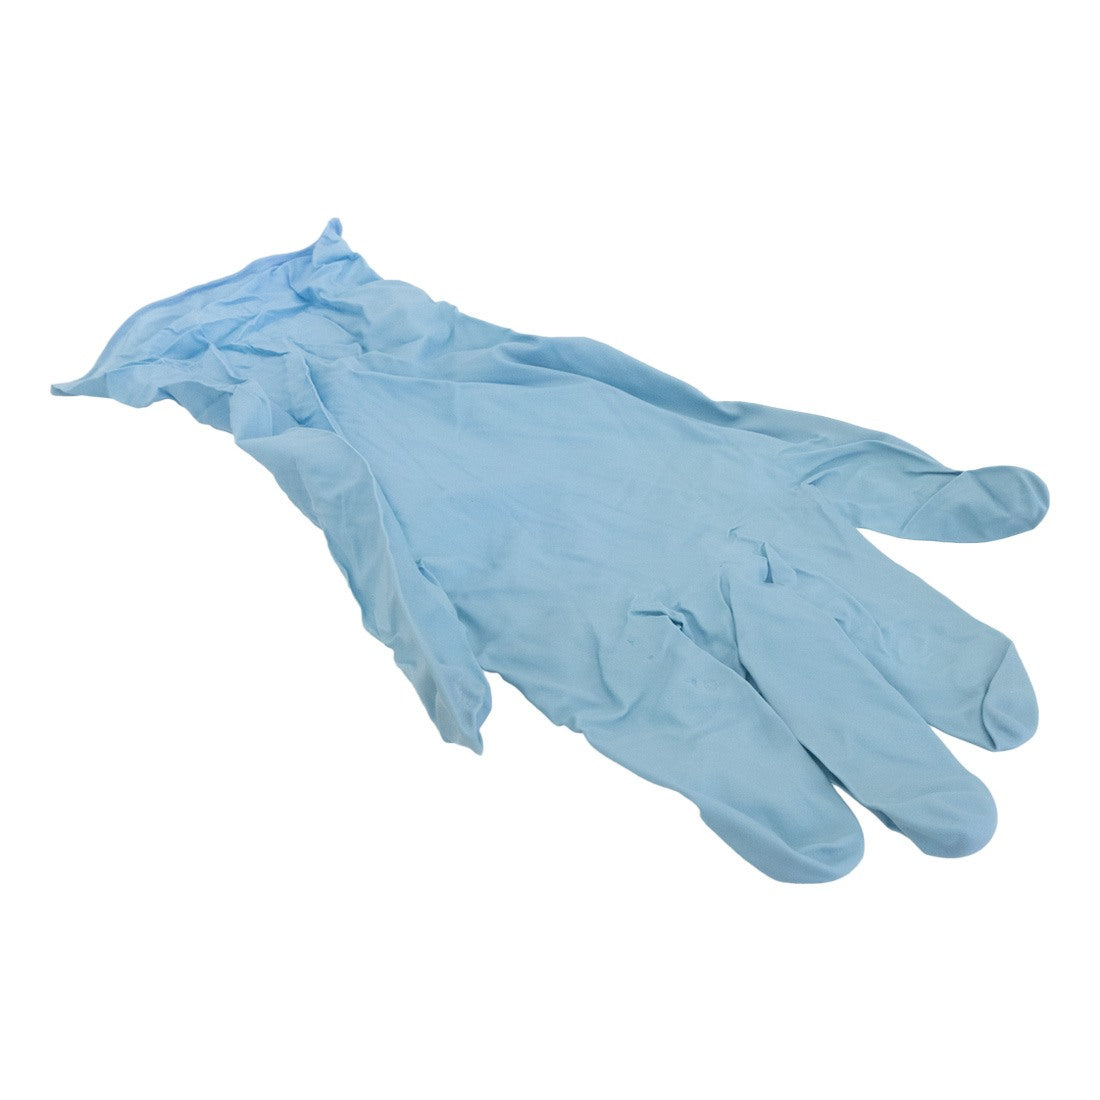 Tronex 9662 Light Blue Extra-Thick Nitrile Exam Glove - XL Flat View